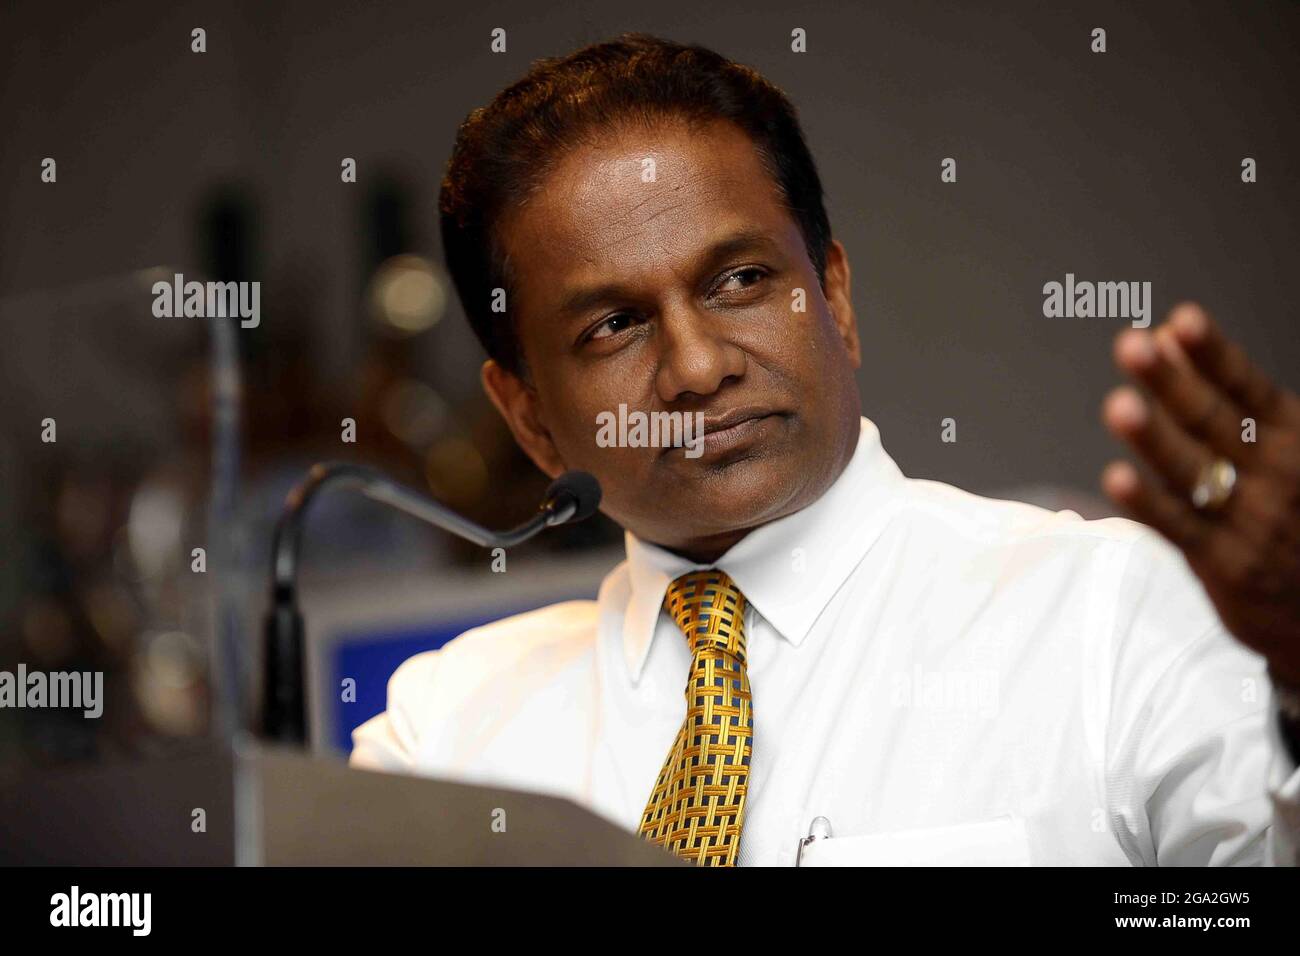 Thilanga Sumathipala is a Sri Lankan politician who was the former deputy speaker of the Parliament of Sri Lanka since 2015 and former President of Sri Lanka Cricket. Colombo, Sri Lanka. Stock Photo